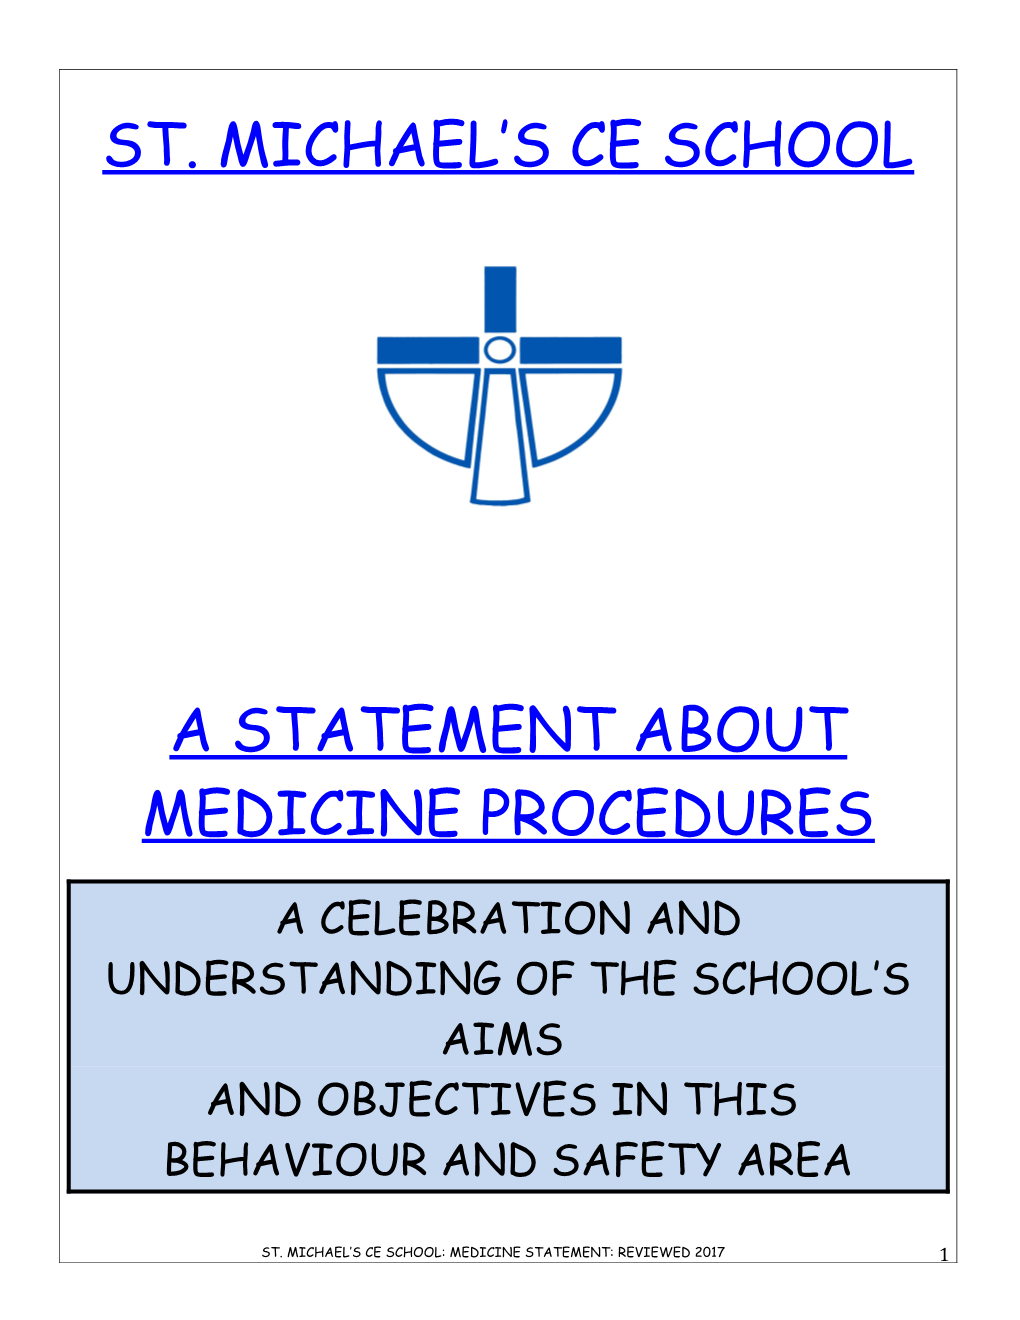 A Statement About Medicine Procedures